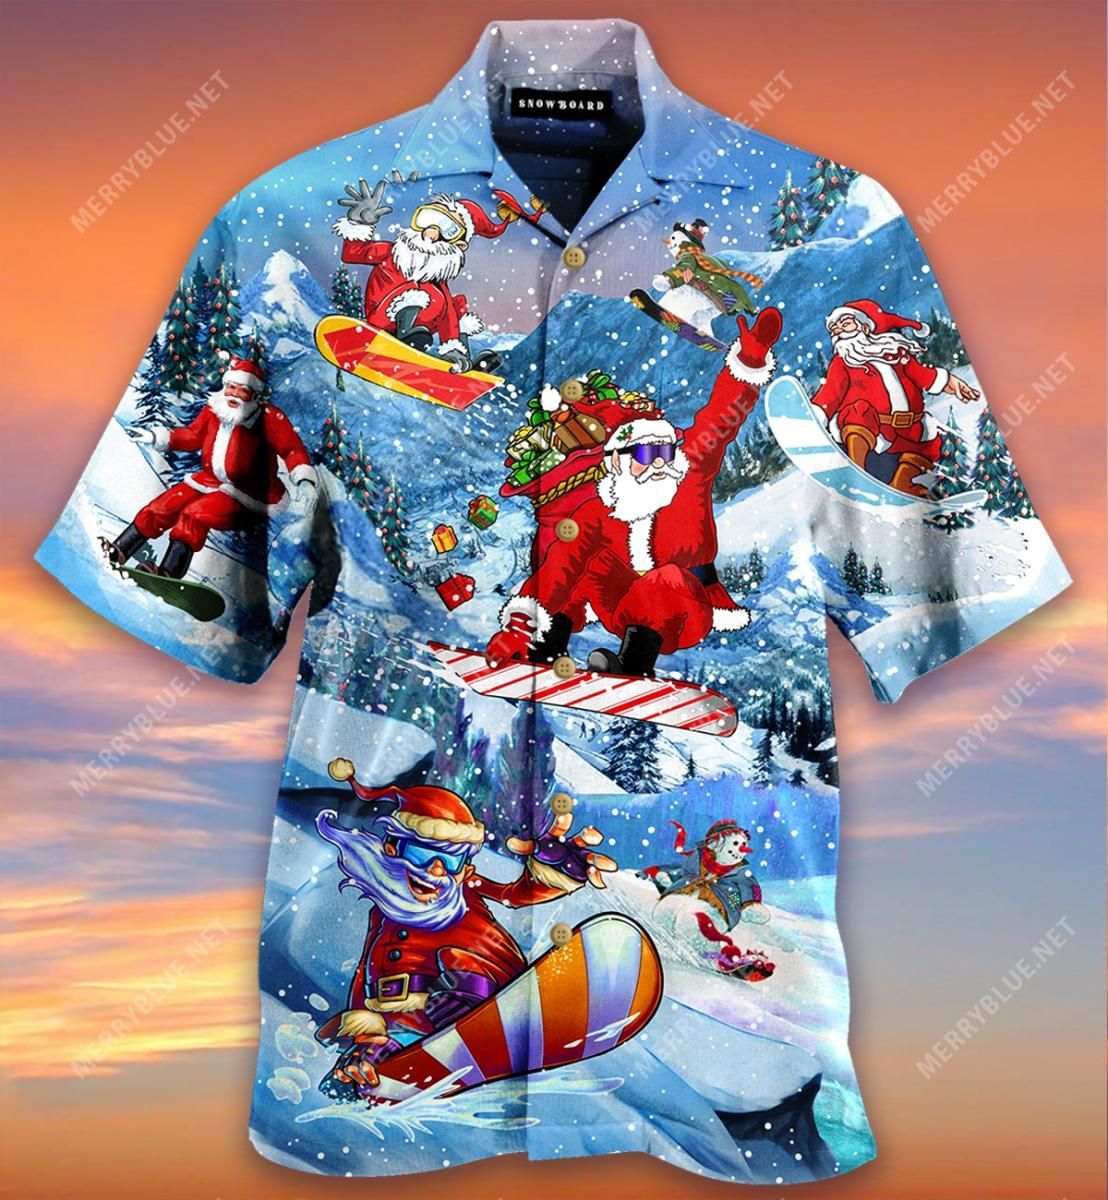 close to heaven down to earth snowboarding aloha hawaiian shirt colorful short sleeve summer beach casual shirt for men and women rn8hs